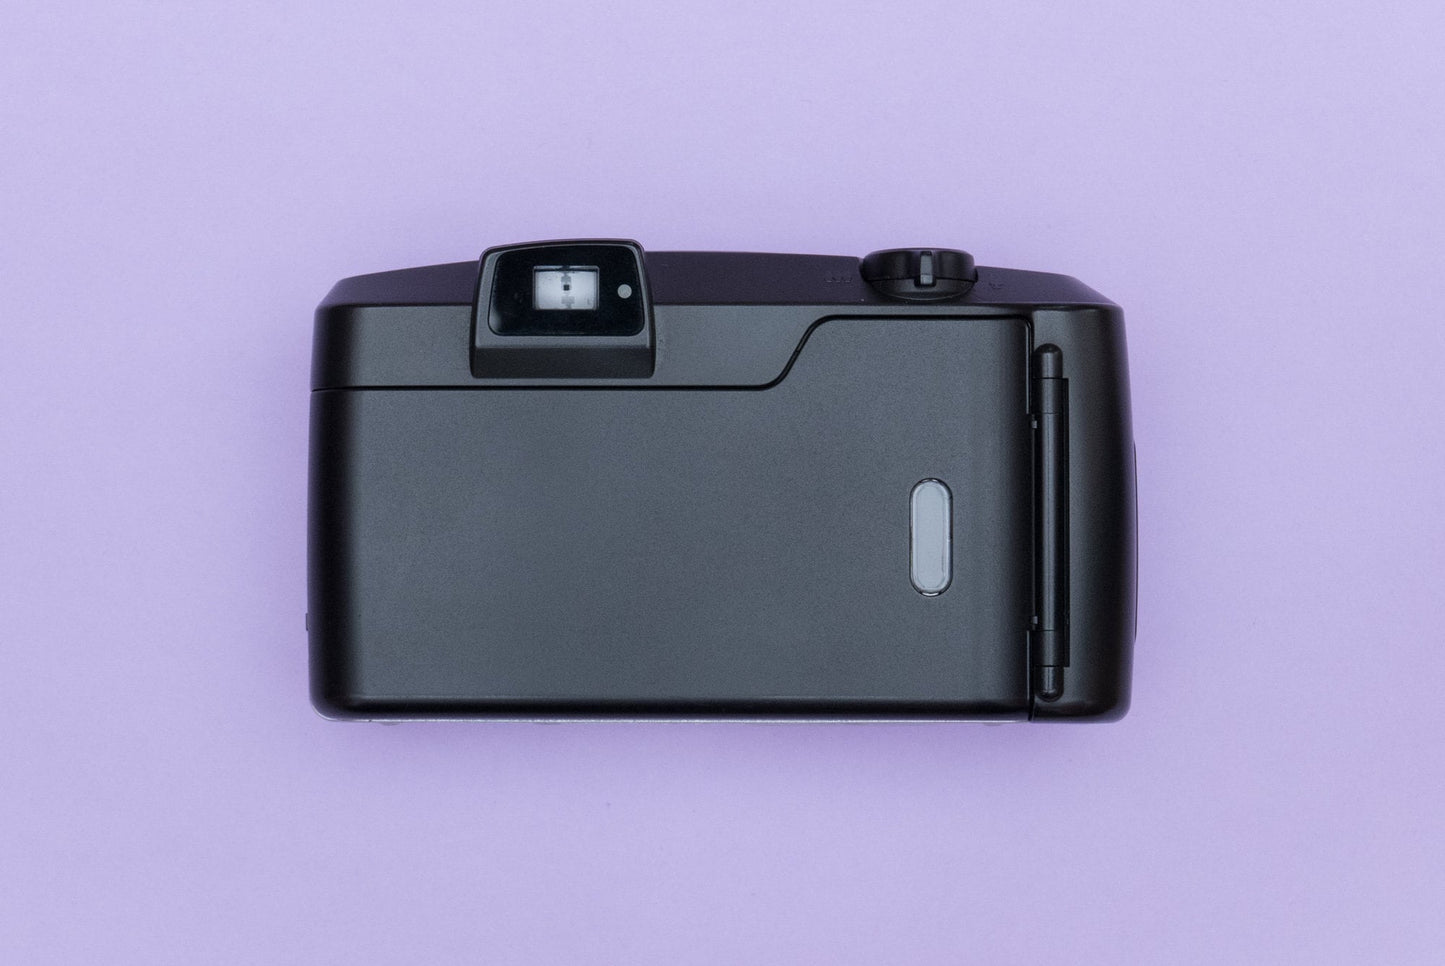 Pentax Espio 115 V Point and Shoot 35mm Compact Film Camera